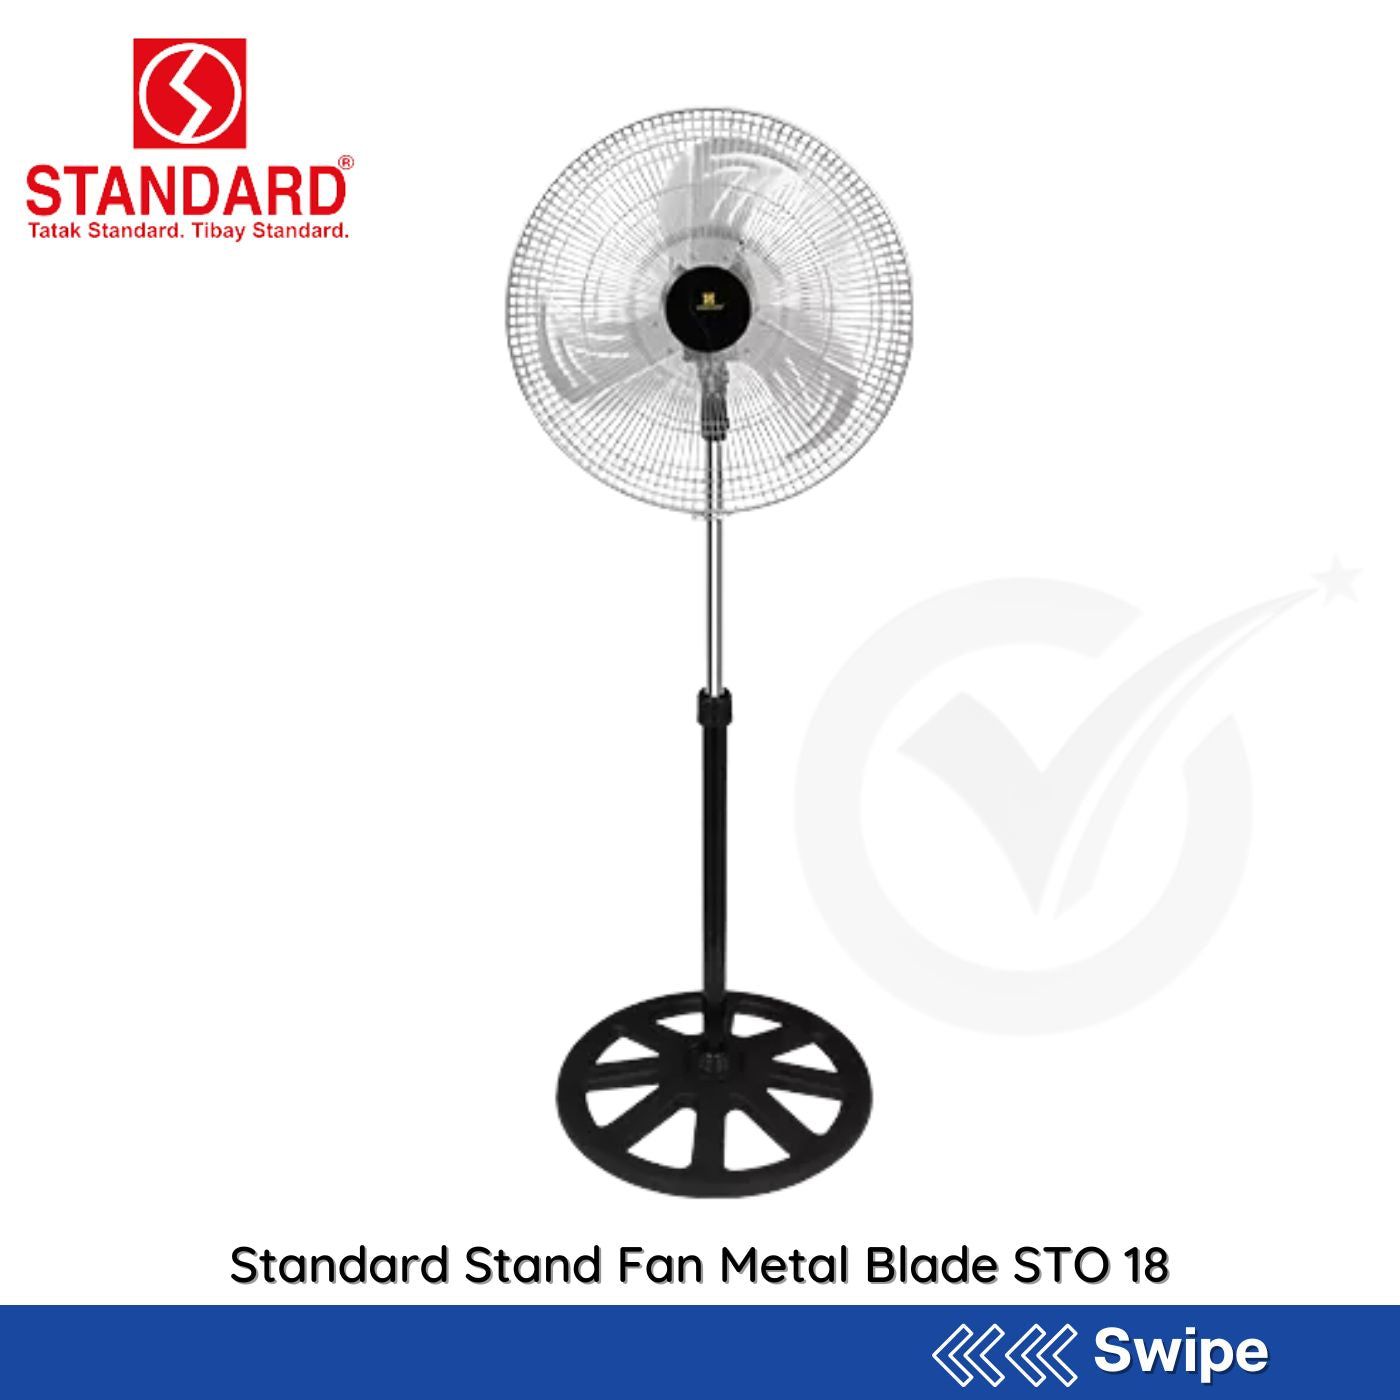 Standard Stand Fan Metal Blade STO 18